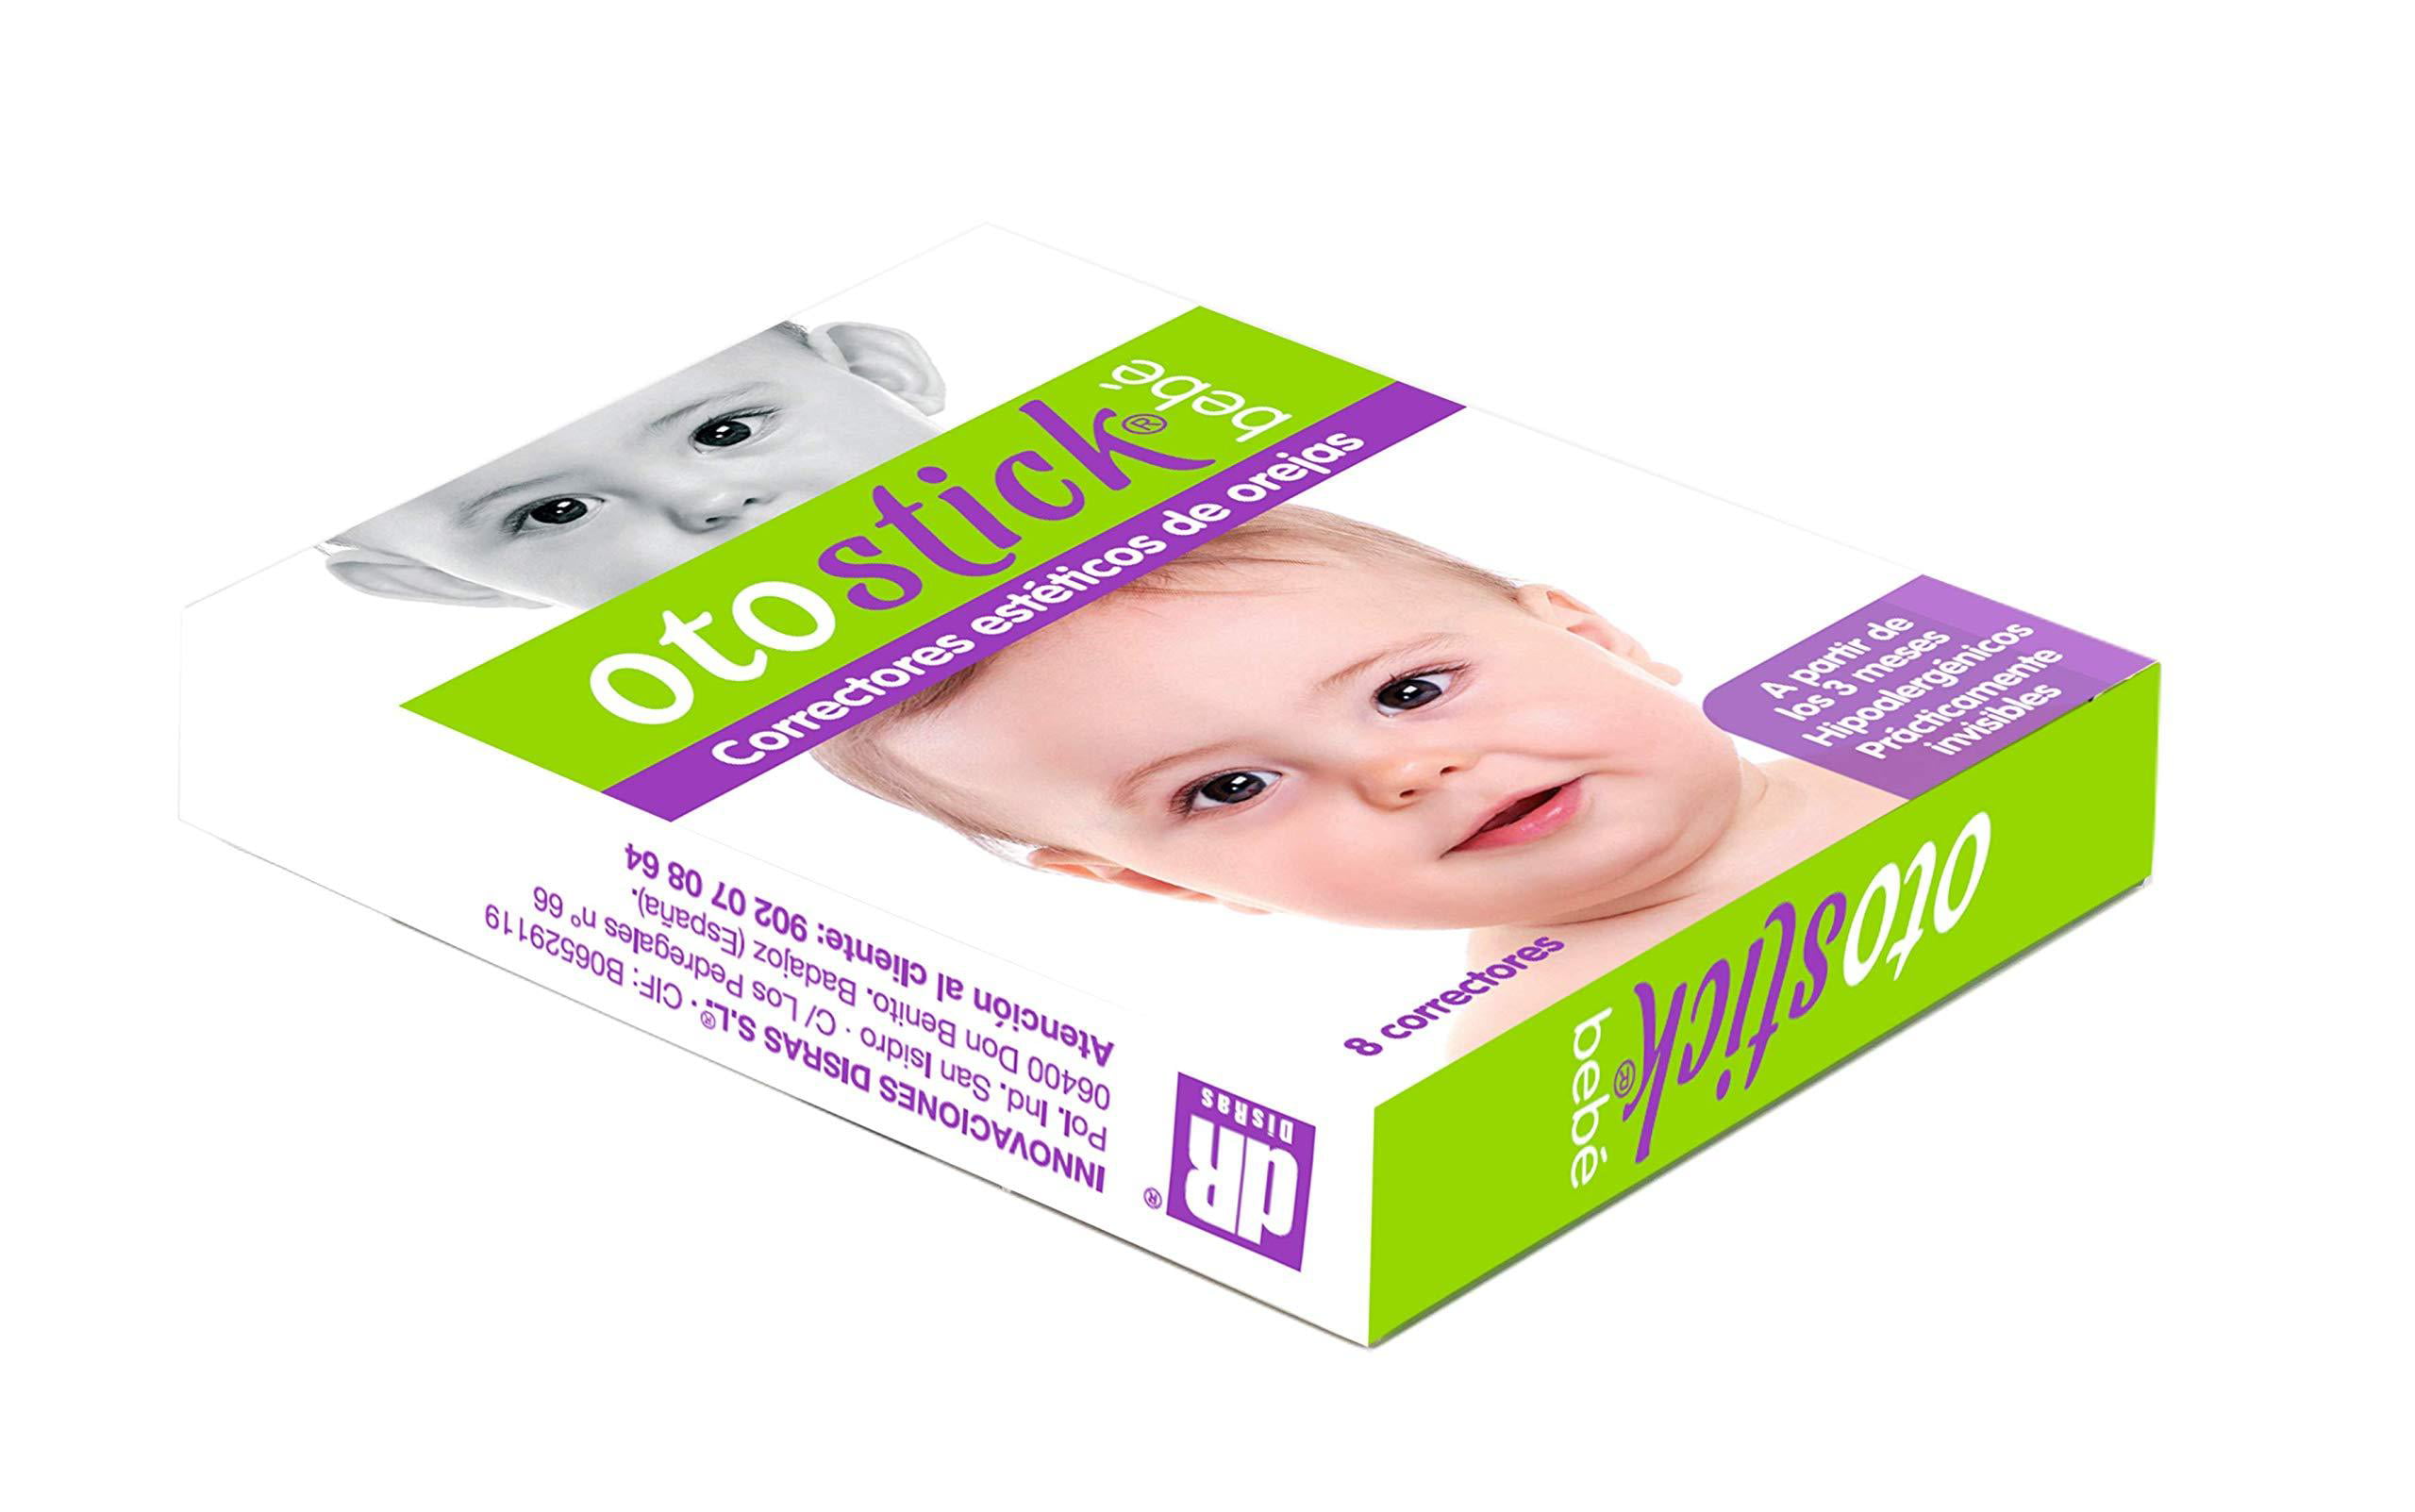 Baby Ear Corrector, Infant Ear Tape for Babies, Baby Silicone Gel Ear Tape  4cmx50cm Perfect Tape for Correcting Newborn's Ear,otostick Ear Corrector